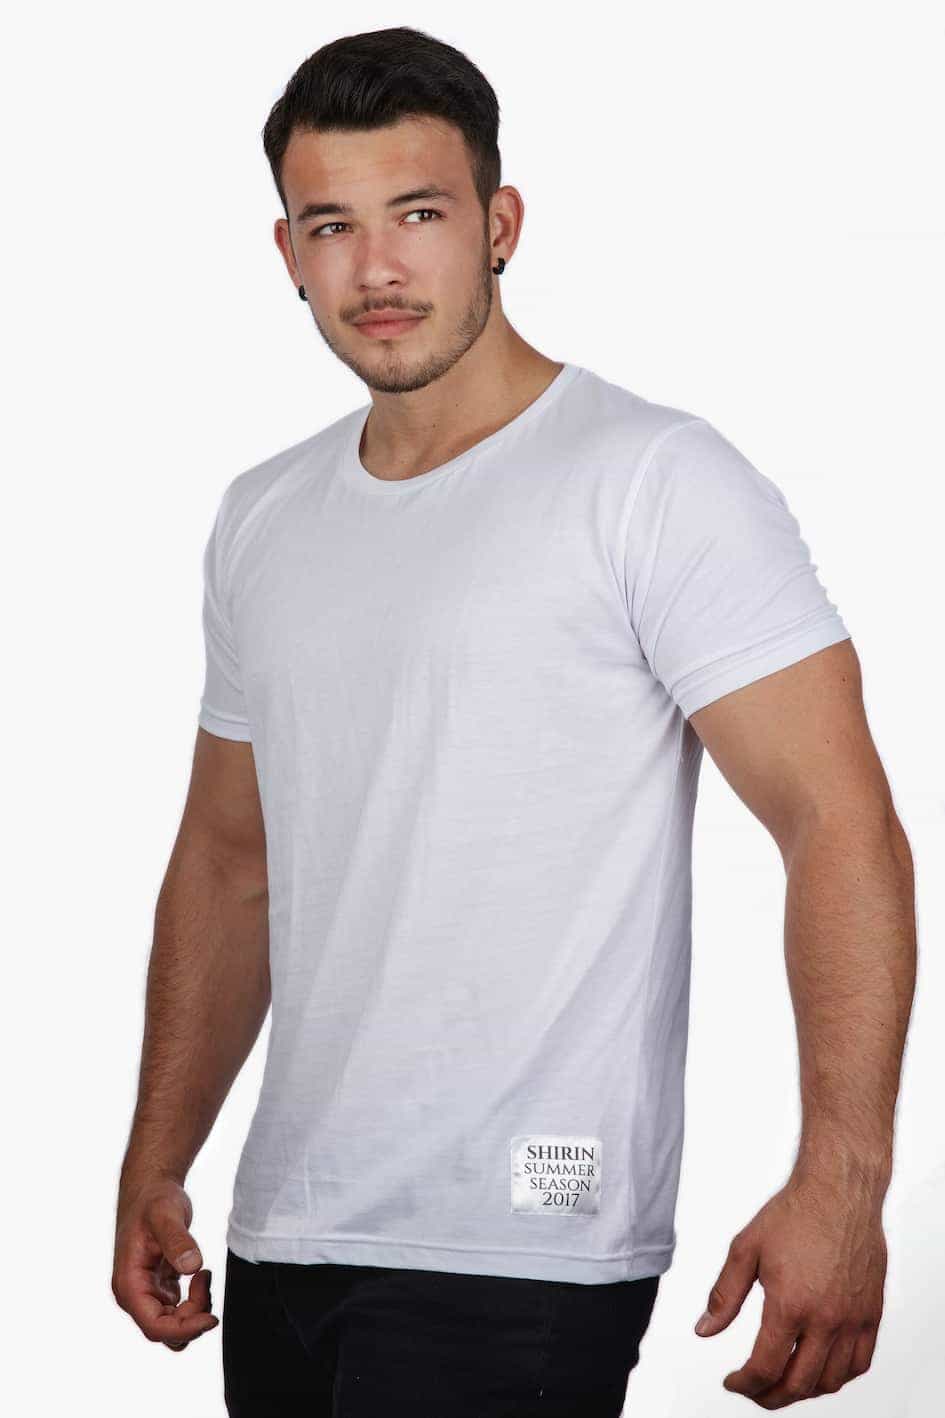 Originale Bräune Shirt